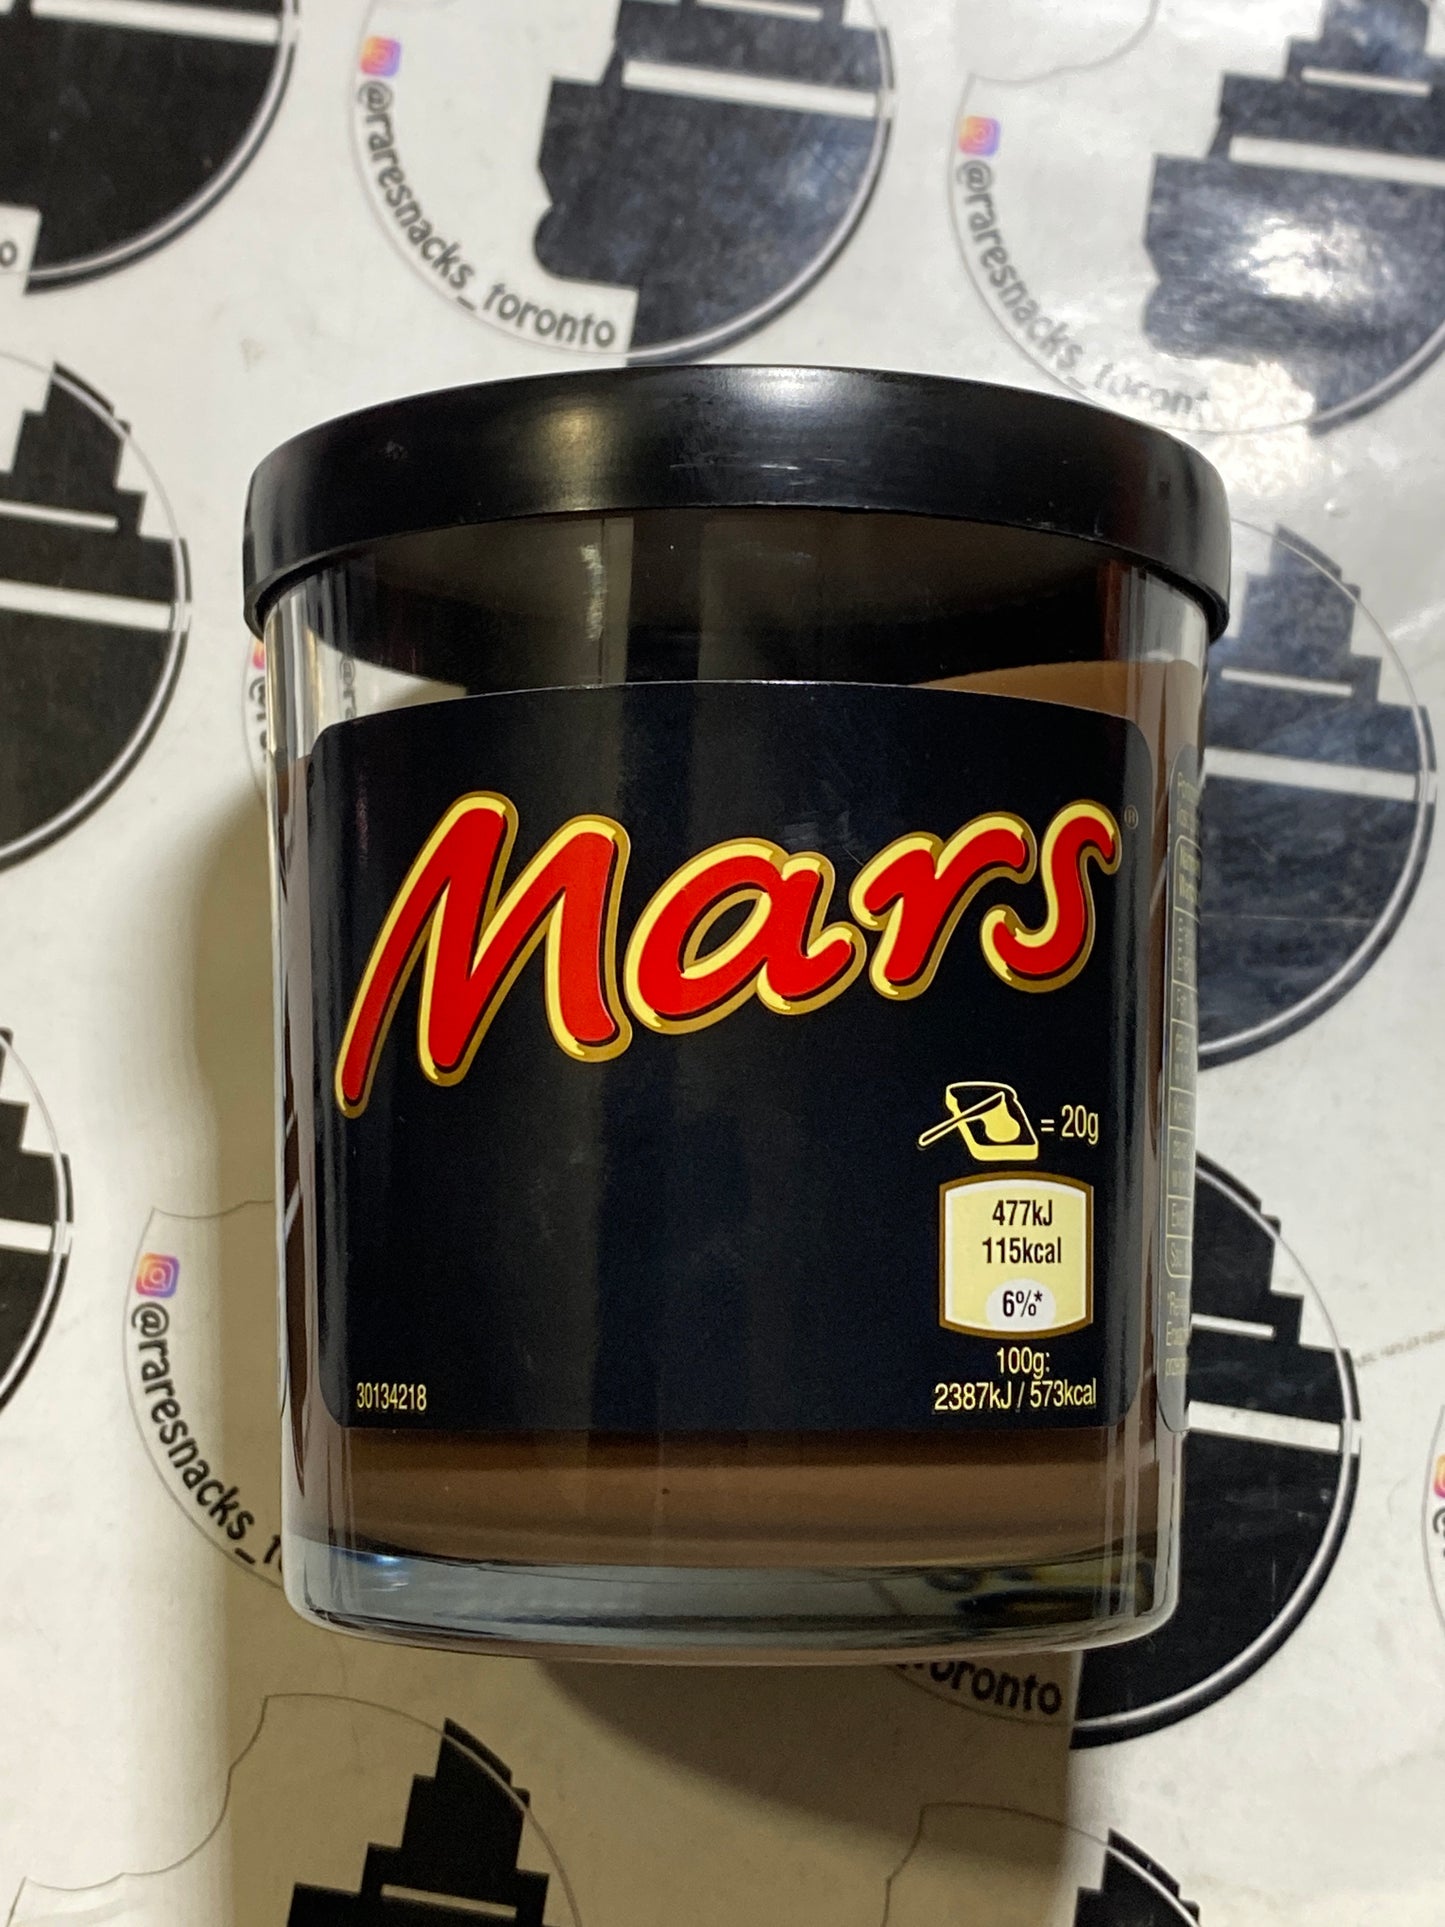 Mars Chocolate caramel creme spread 200g